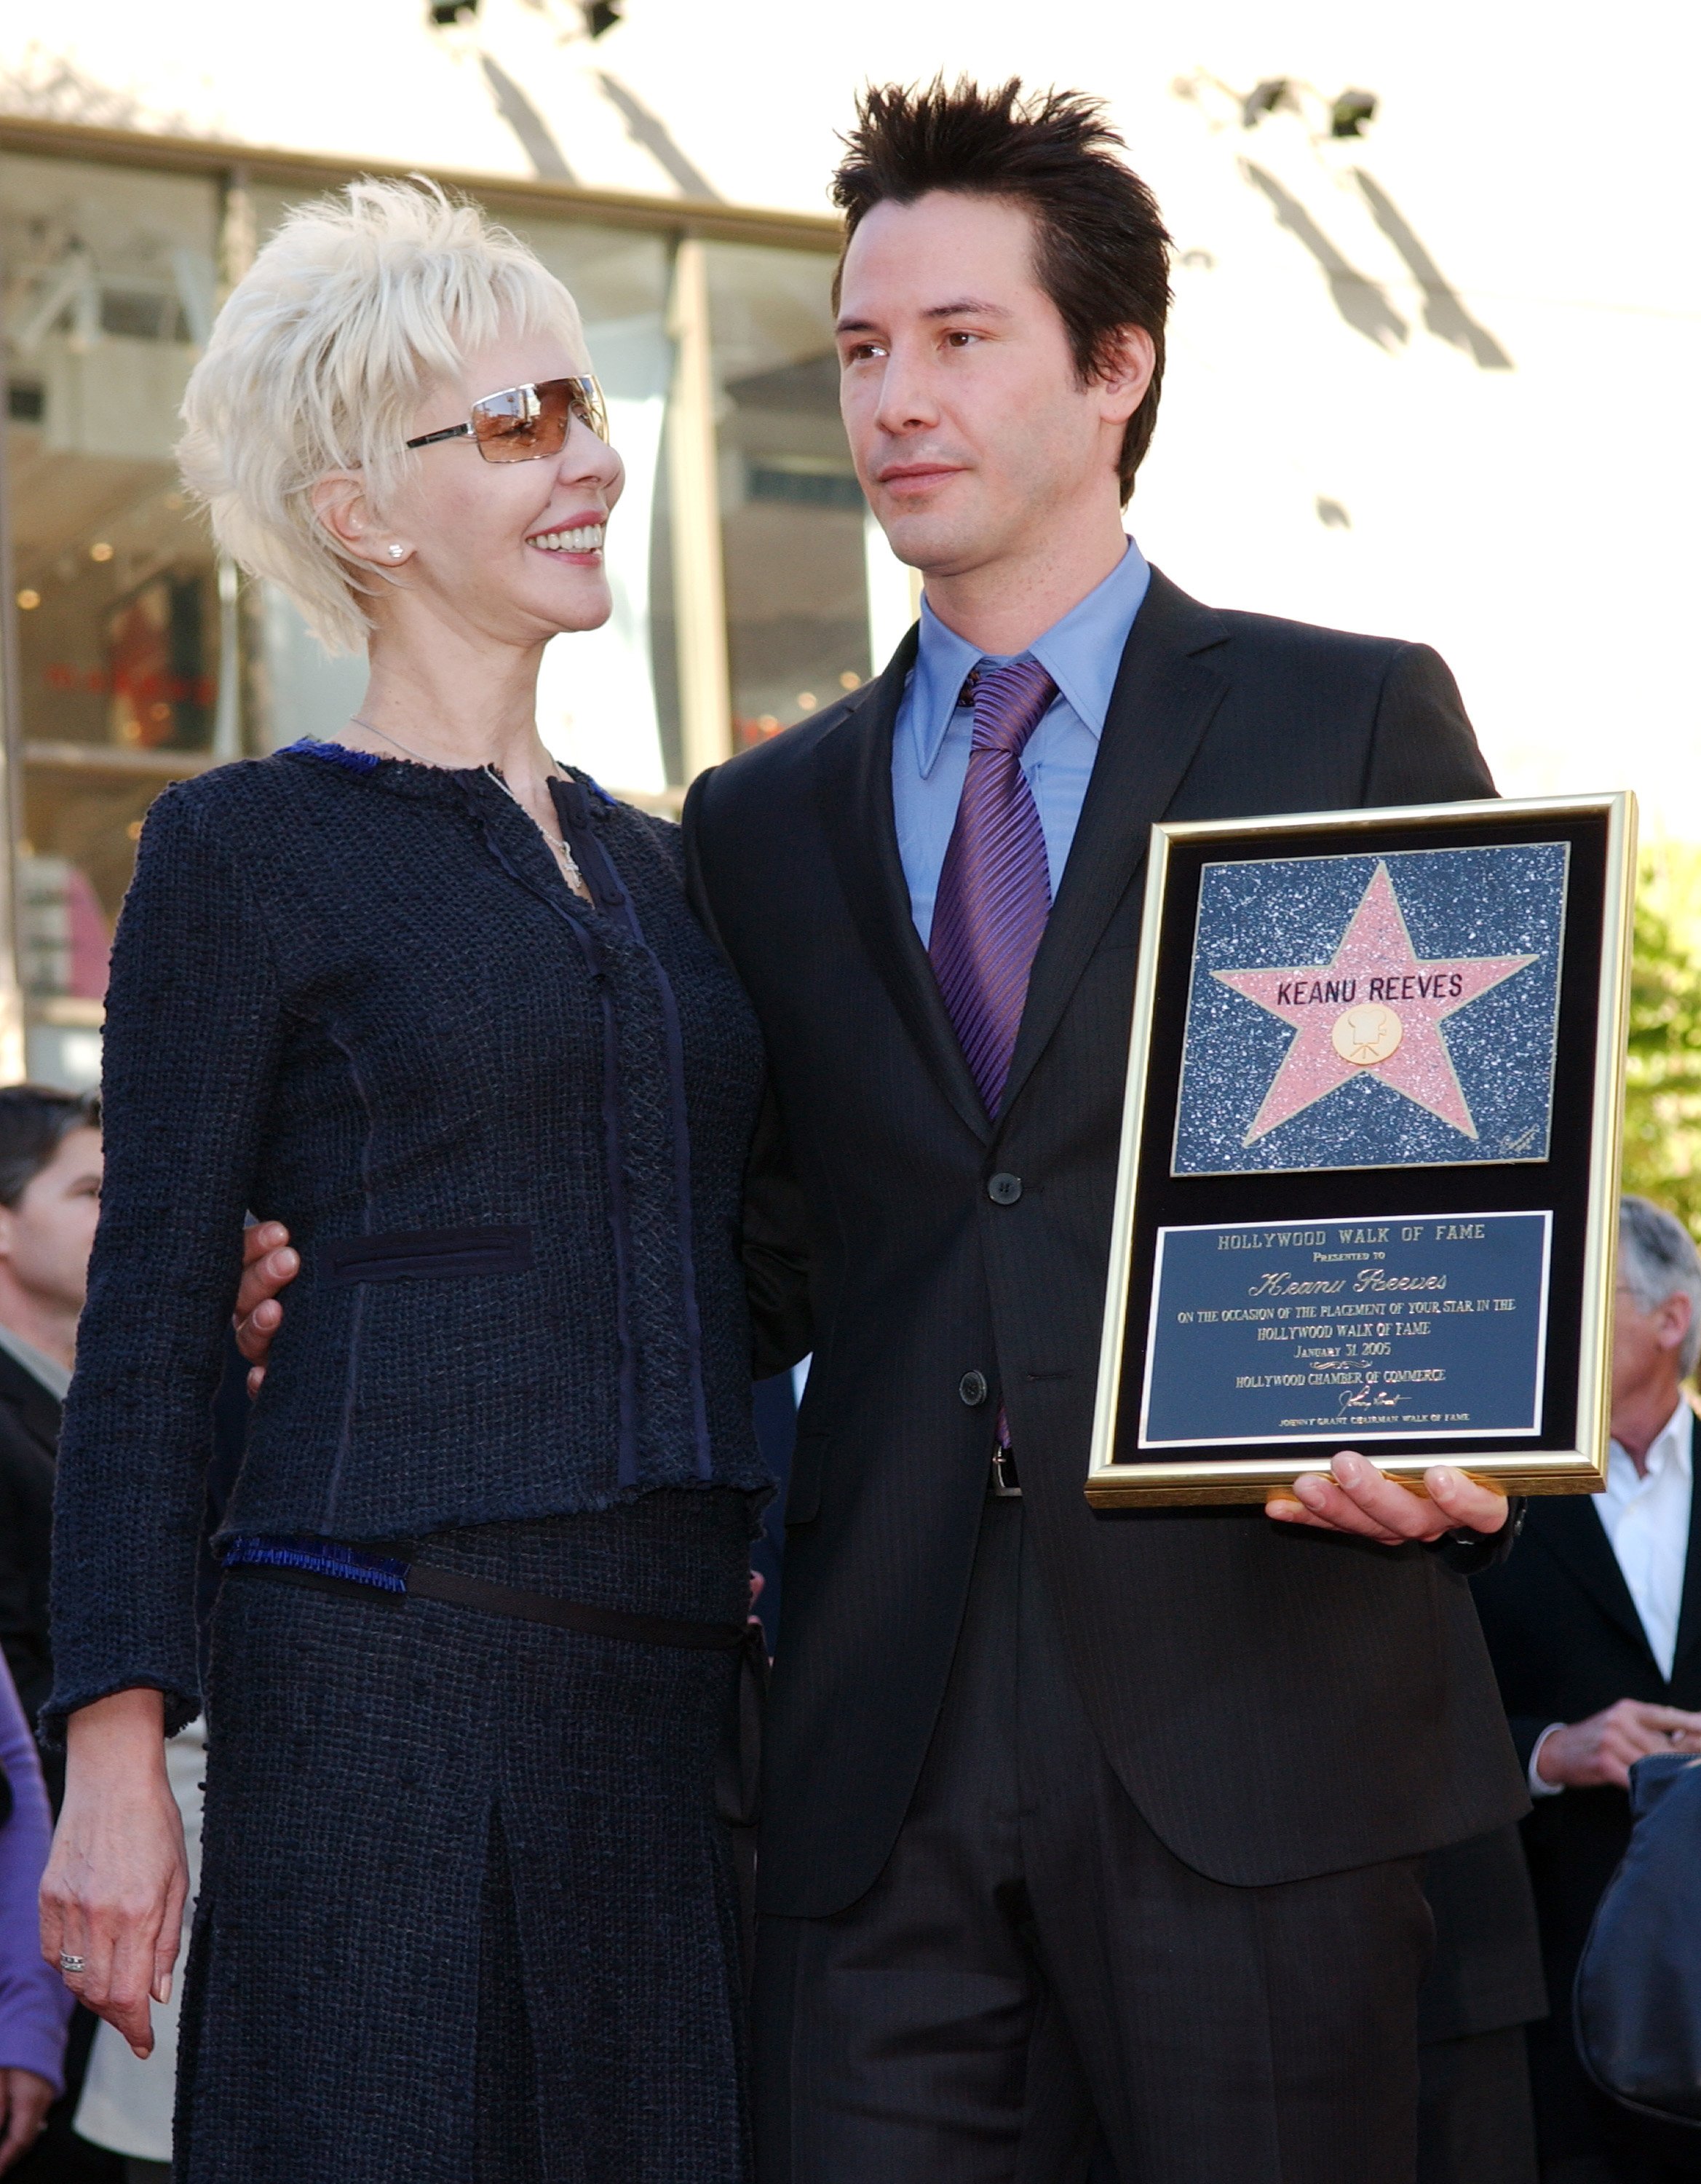 Keanu Reeves pose avec sa mère, Patricia Taylor, lors de la cérémonie "Keanu Reeves Honored With a Star" sur le Hollywood Walk of Fame en Californie | Source : Getty Images